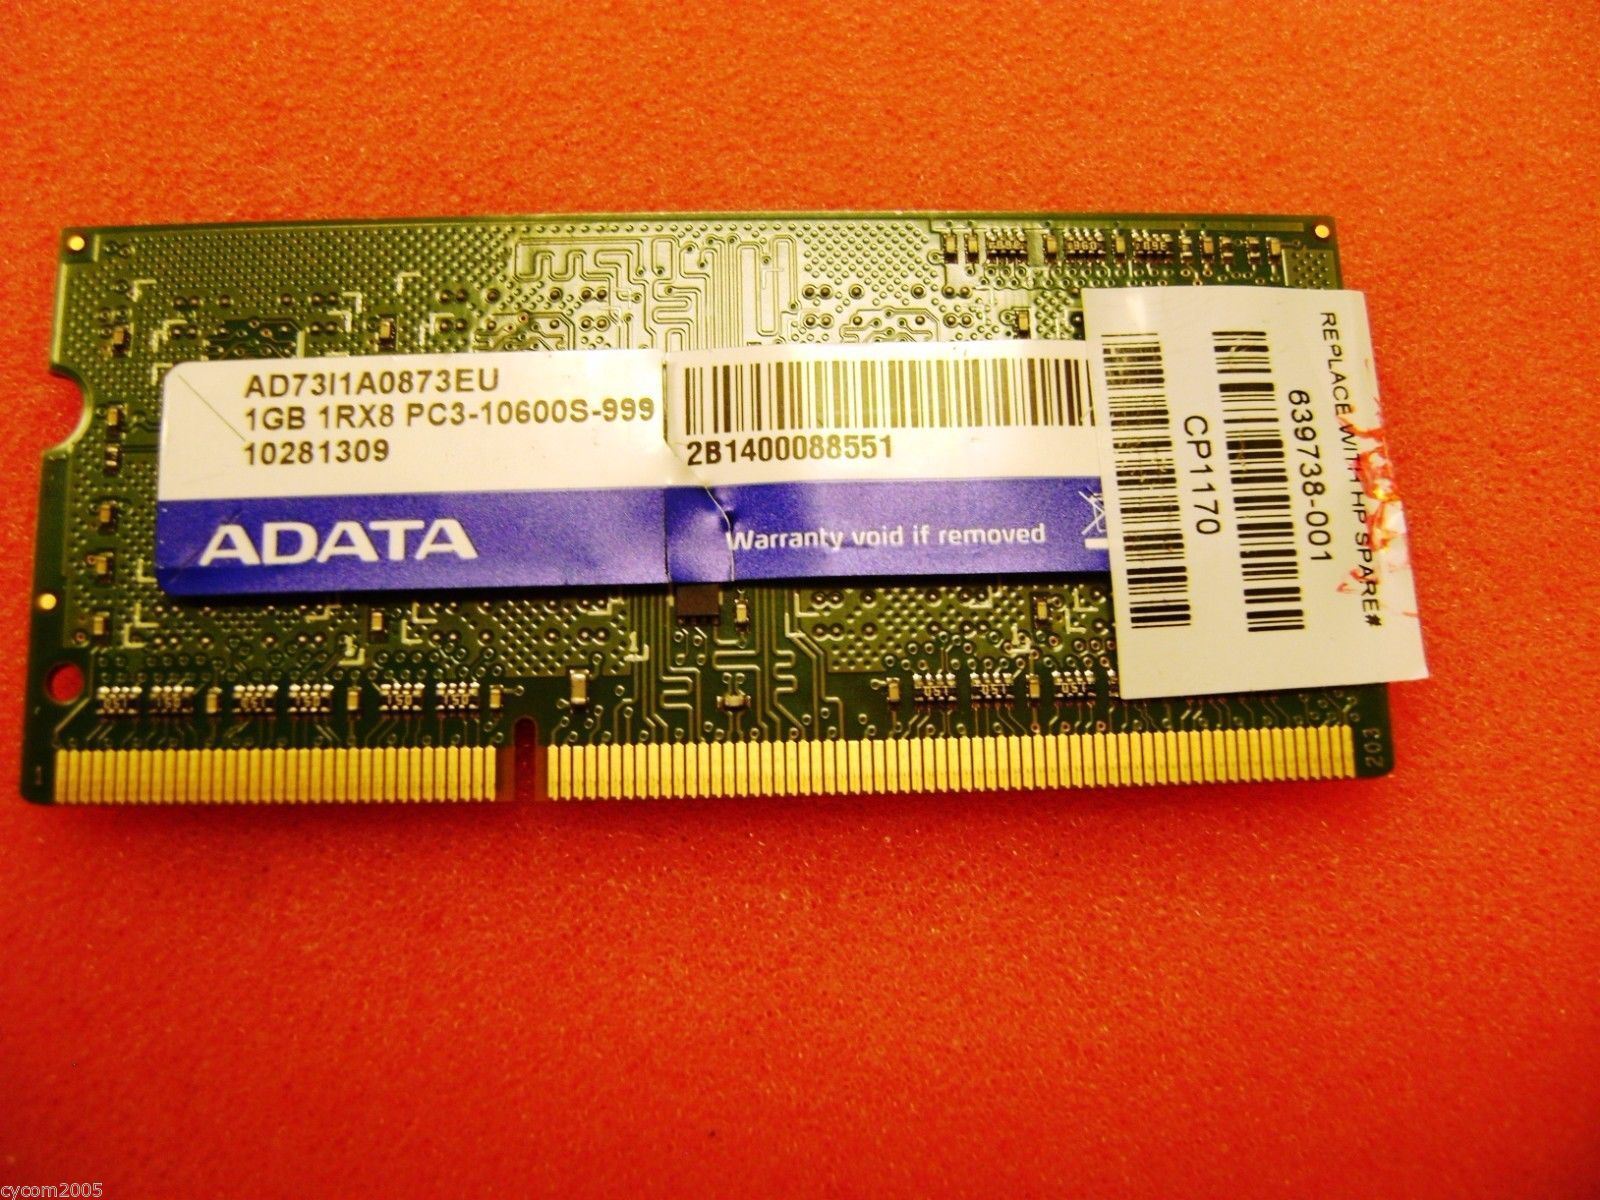 ADATA 1GB PC3-10600 DDR3-1333  Laptop Memory  RAM * AD731A0873EU